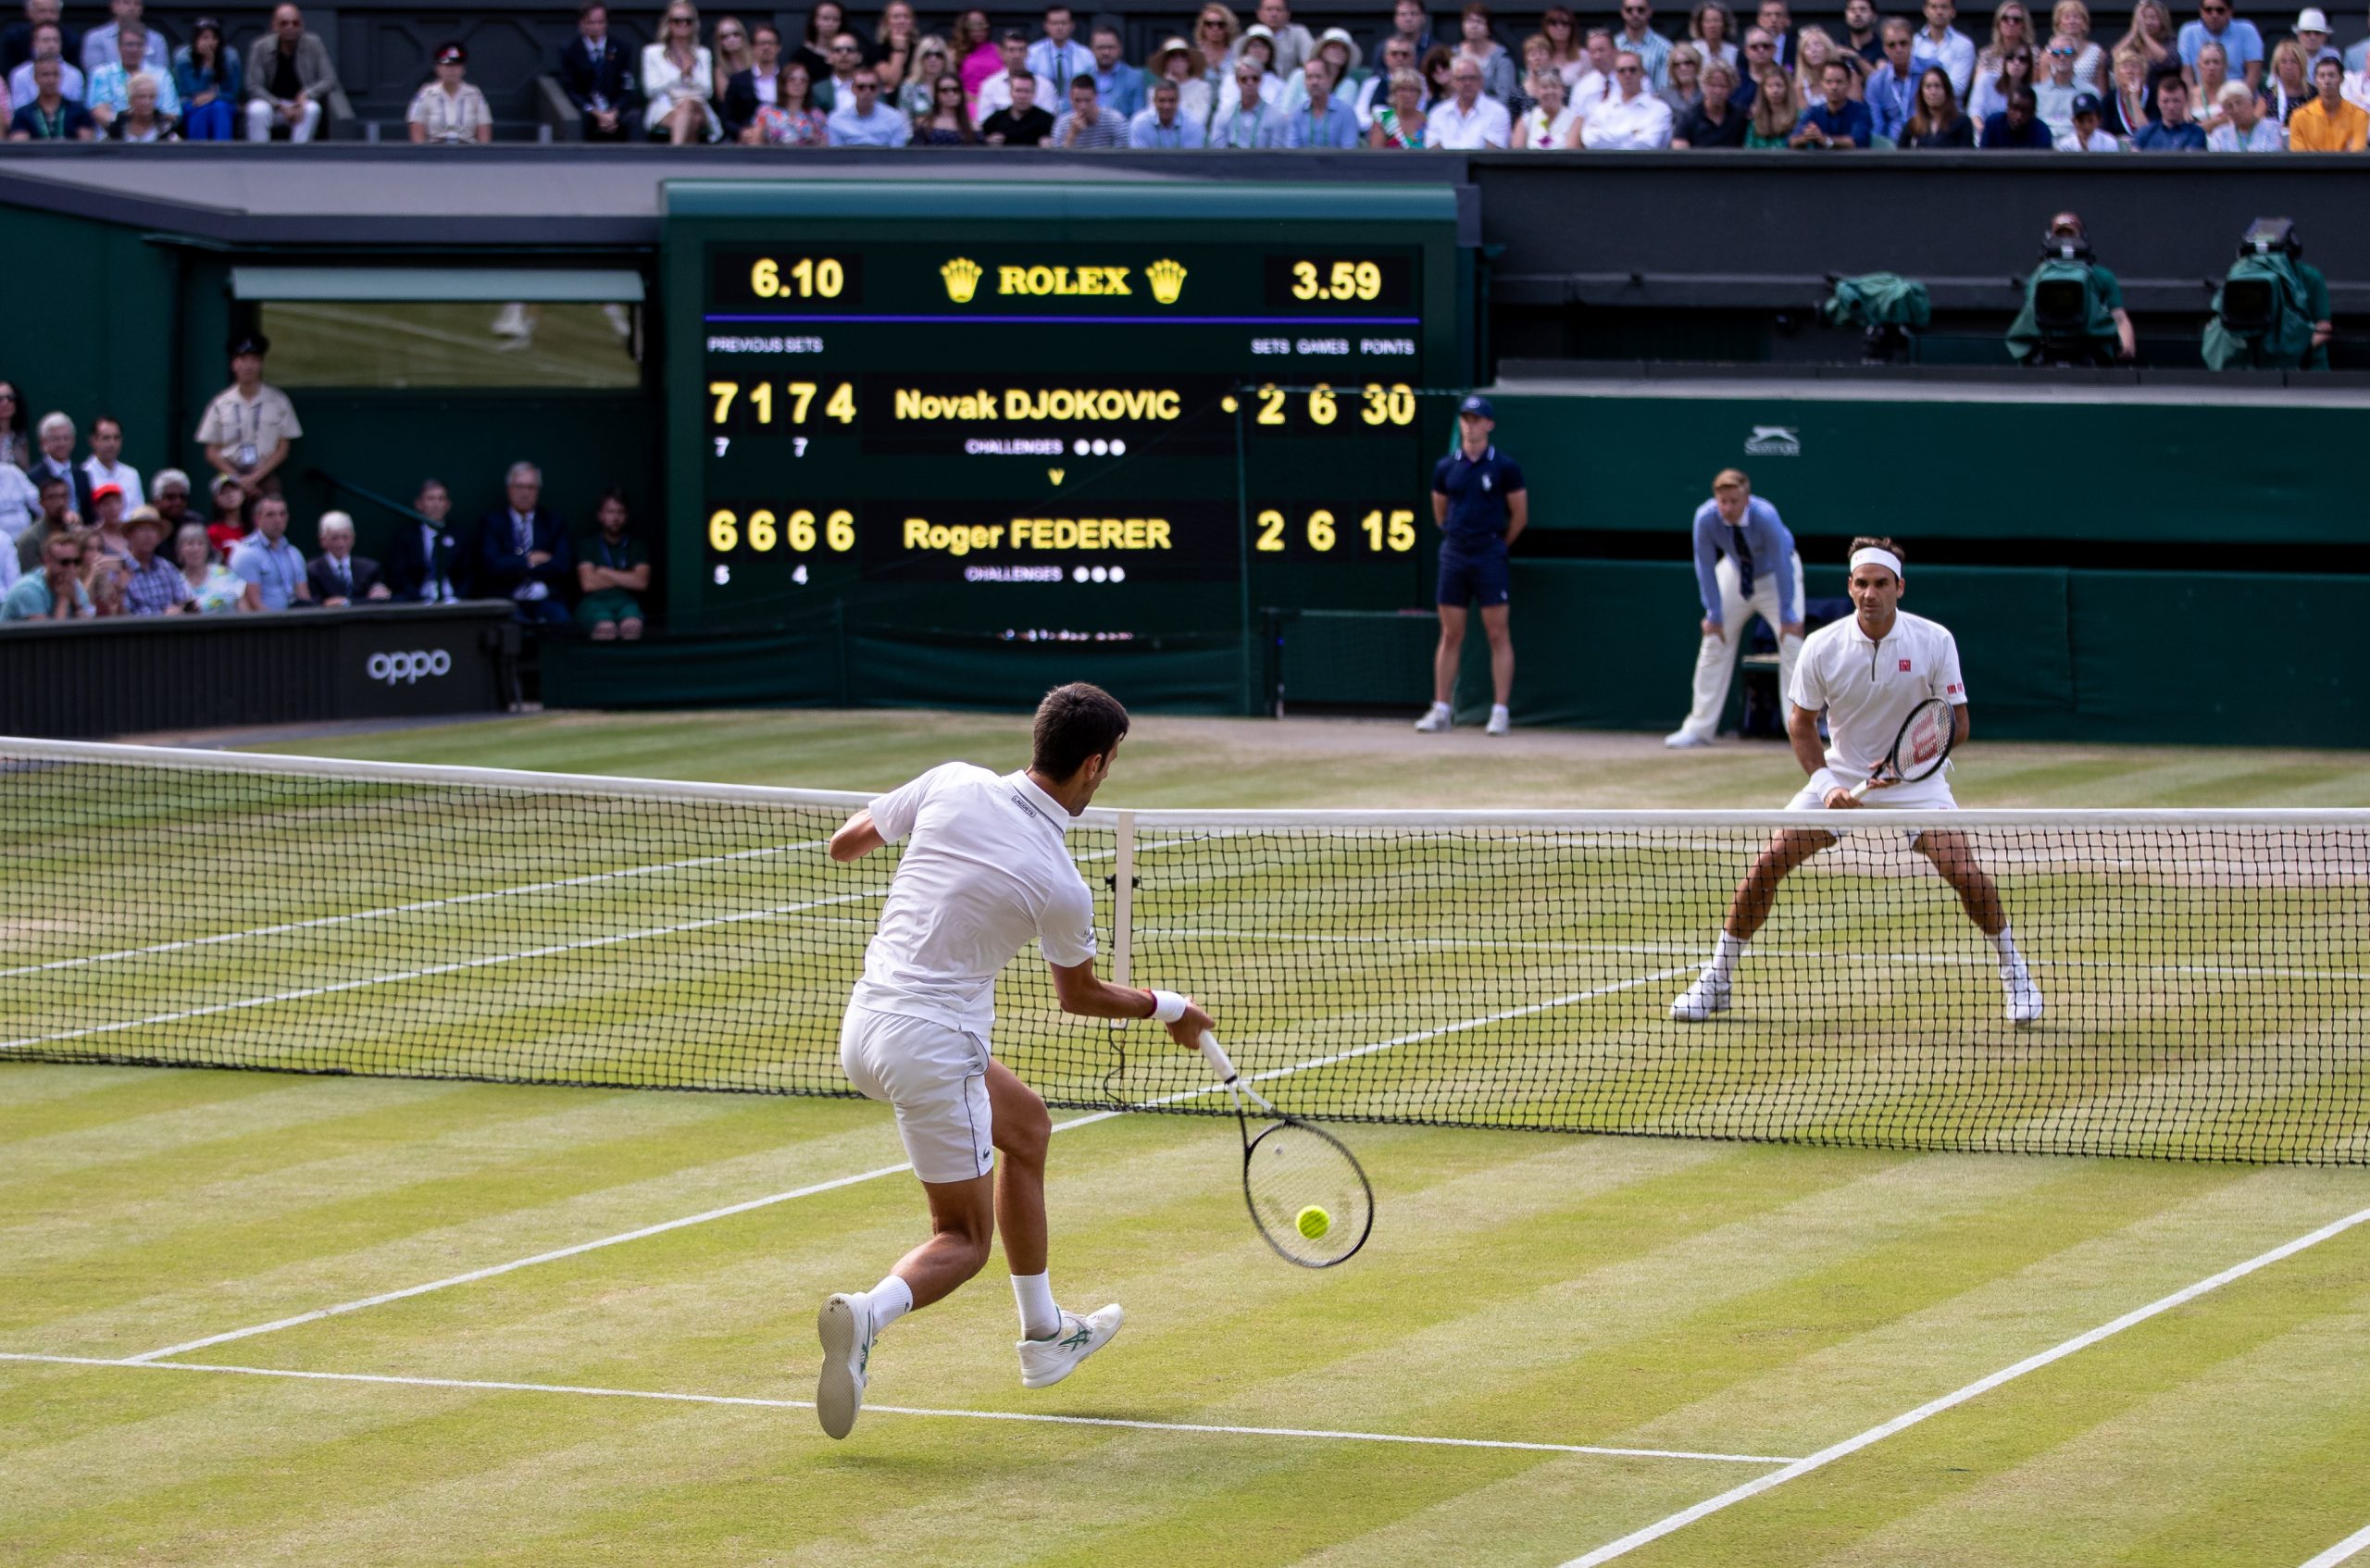 Novak Djokovic plays Roger Federer in file photo; Credit: Wimbledon Twitter page